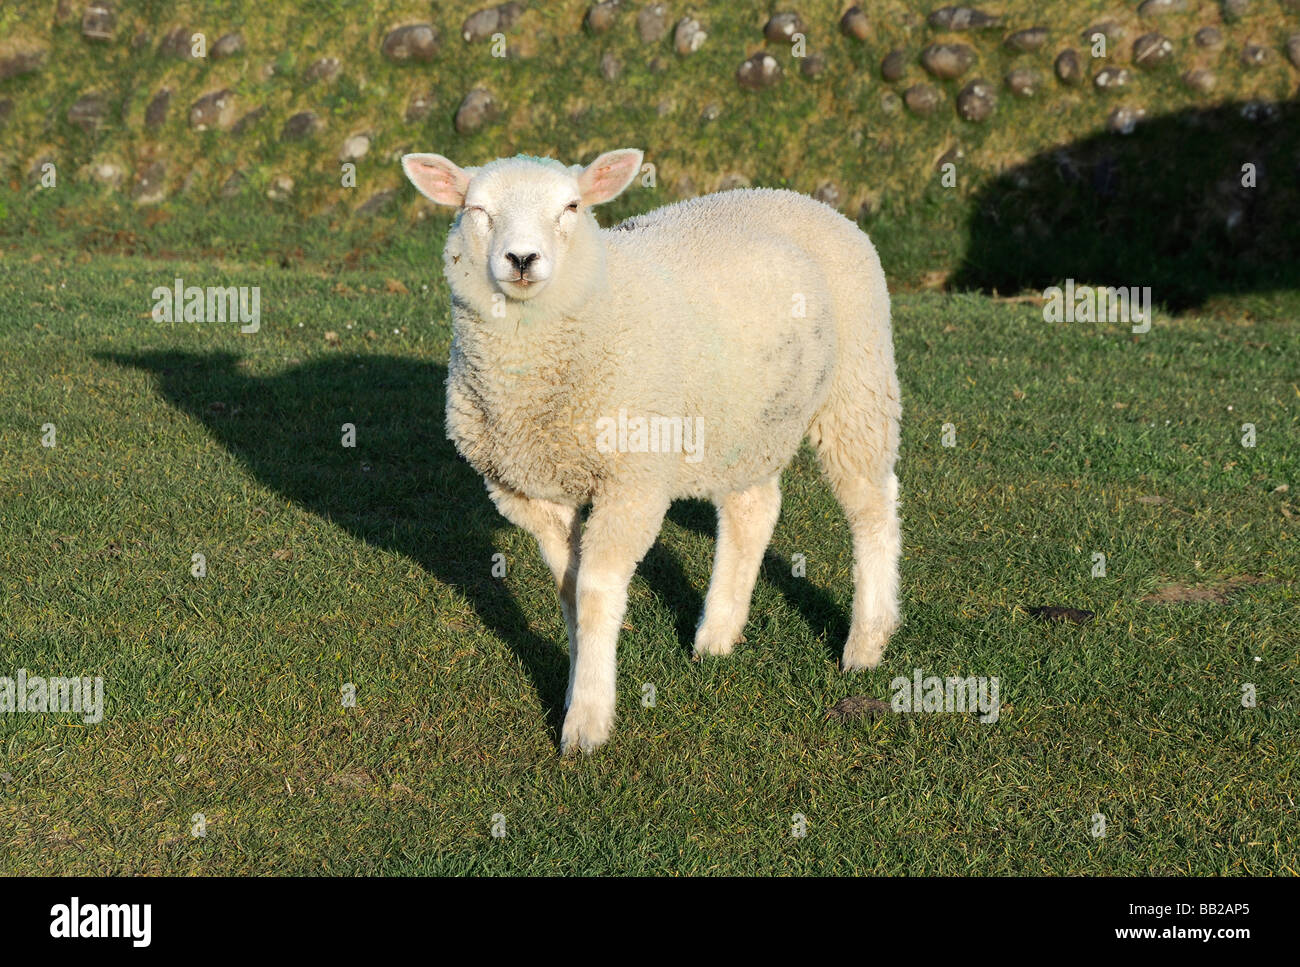 young, curious sheep Stock Photo